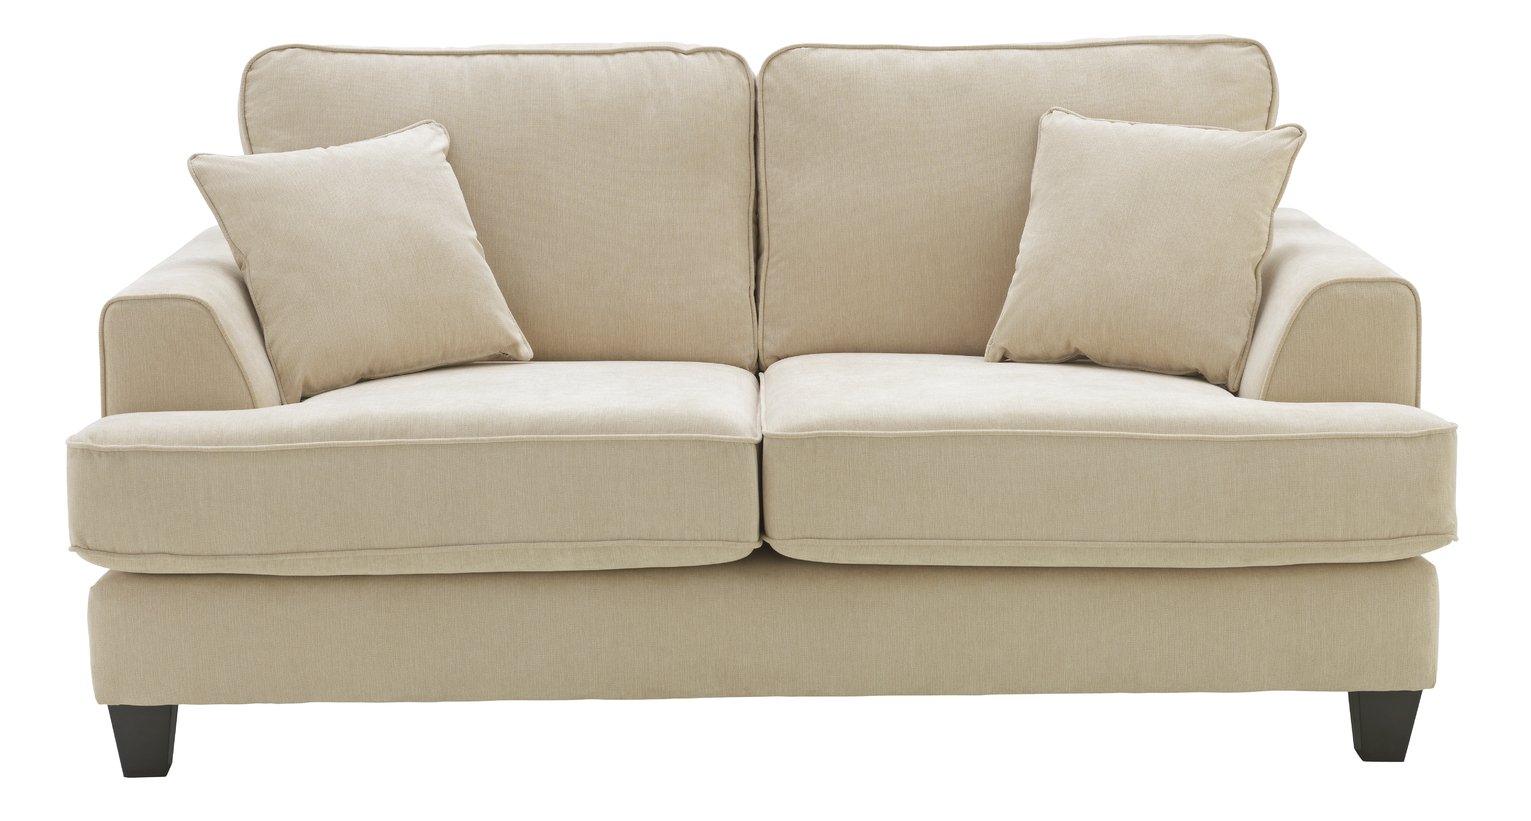 Argos Home Hampstead 2 Seater Fabric Sofa - Beige